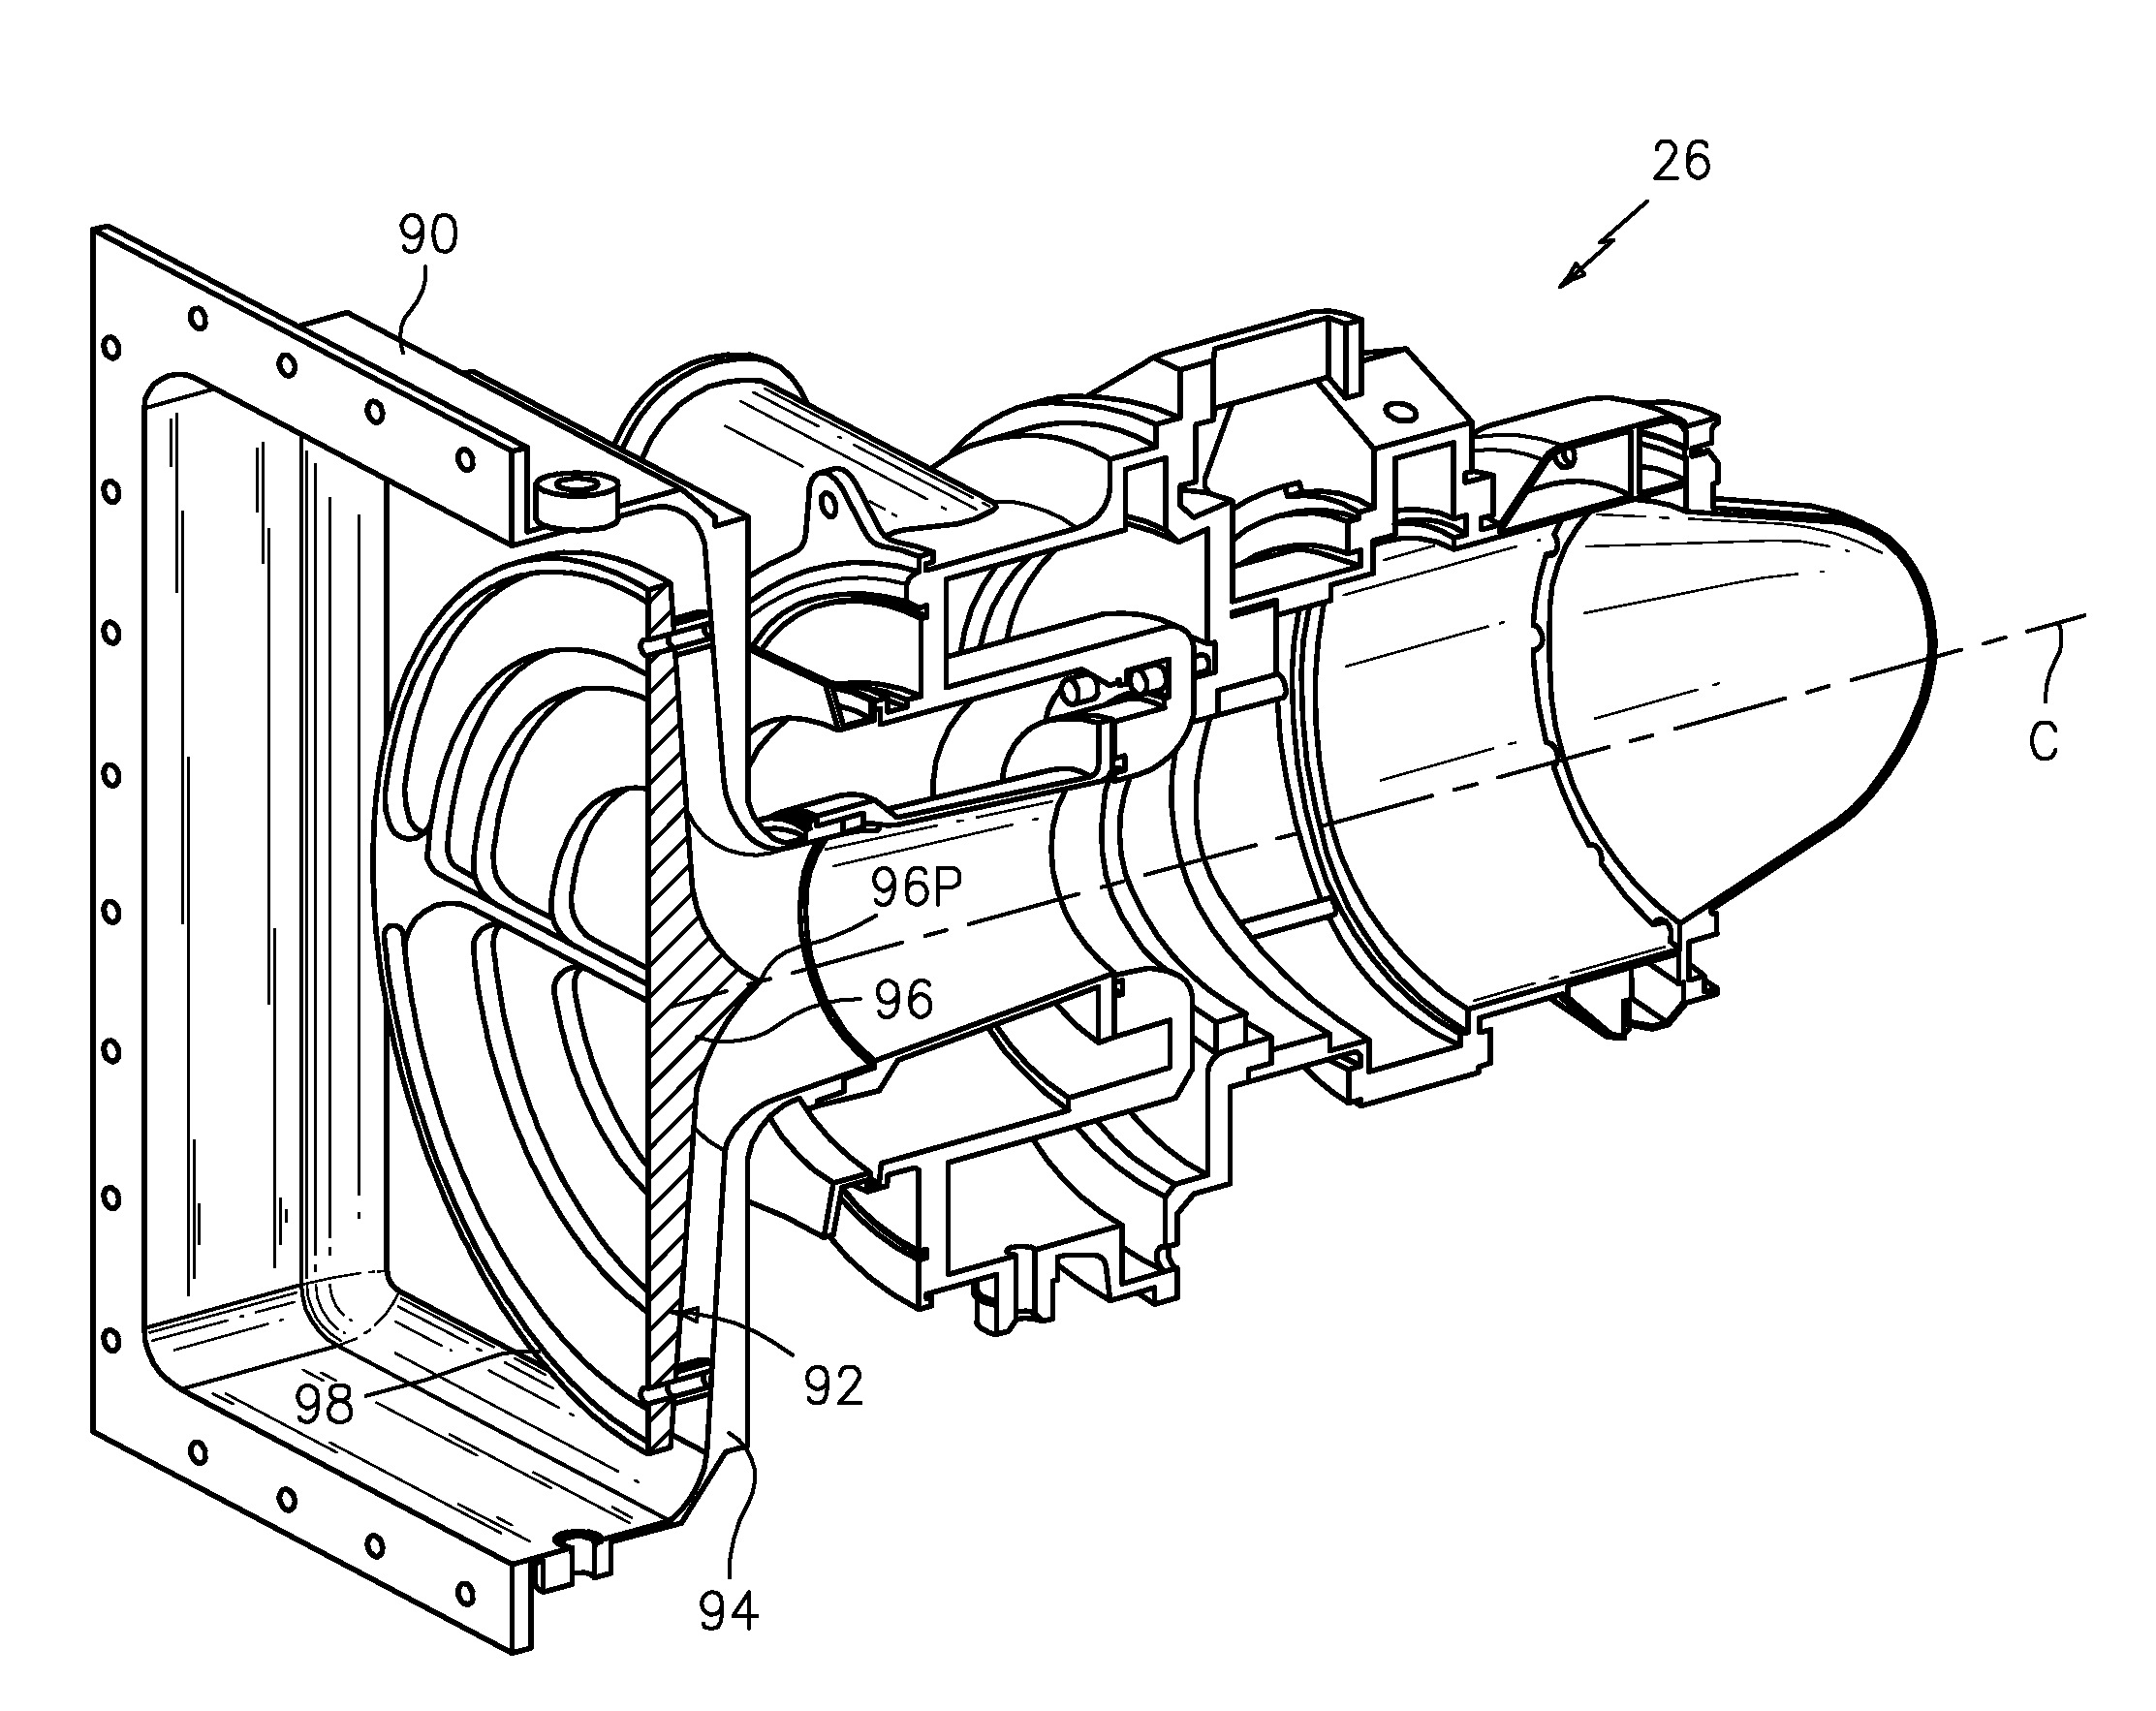 Air cycle machine for an aircraft environmental control system